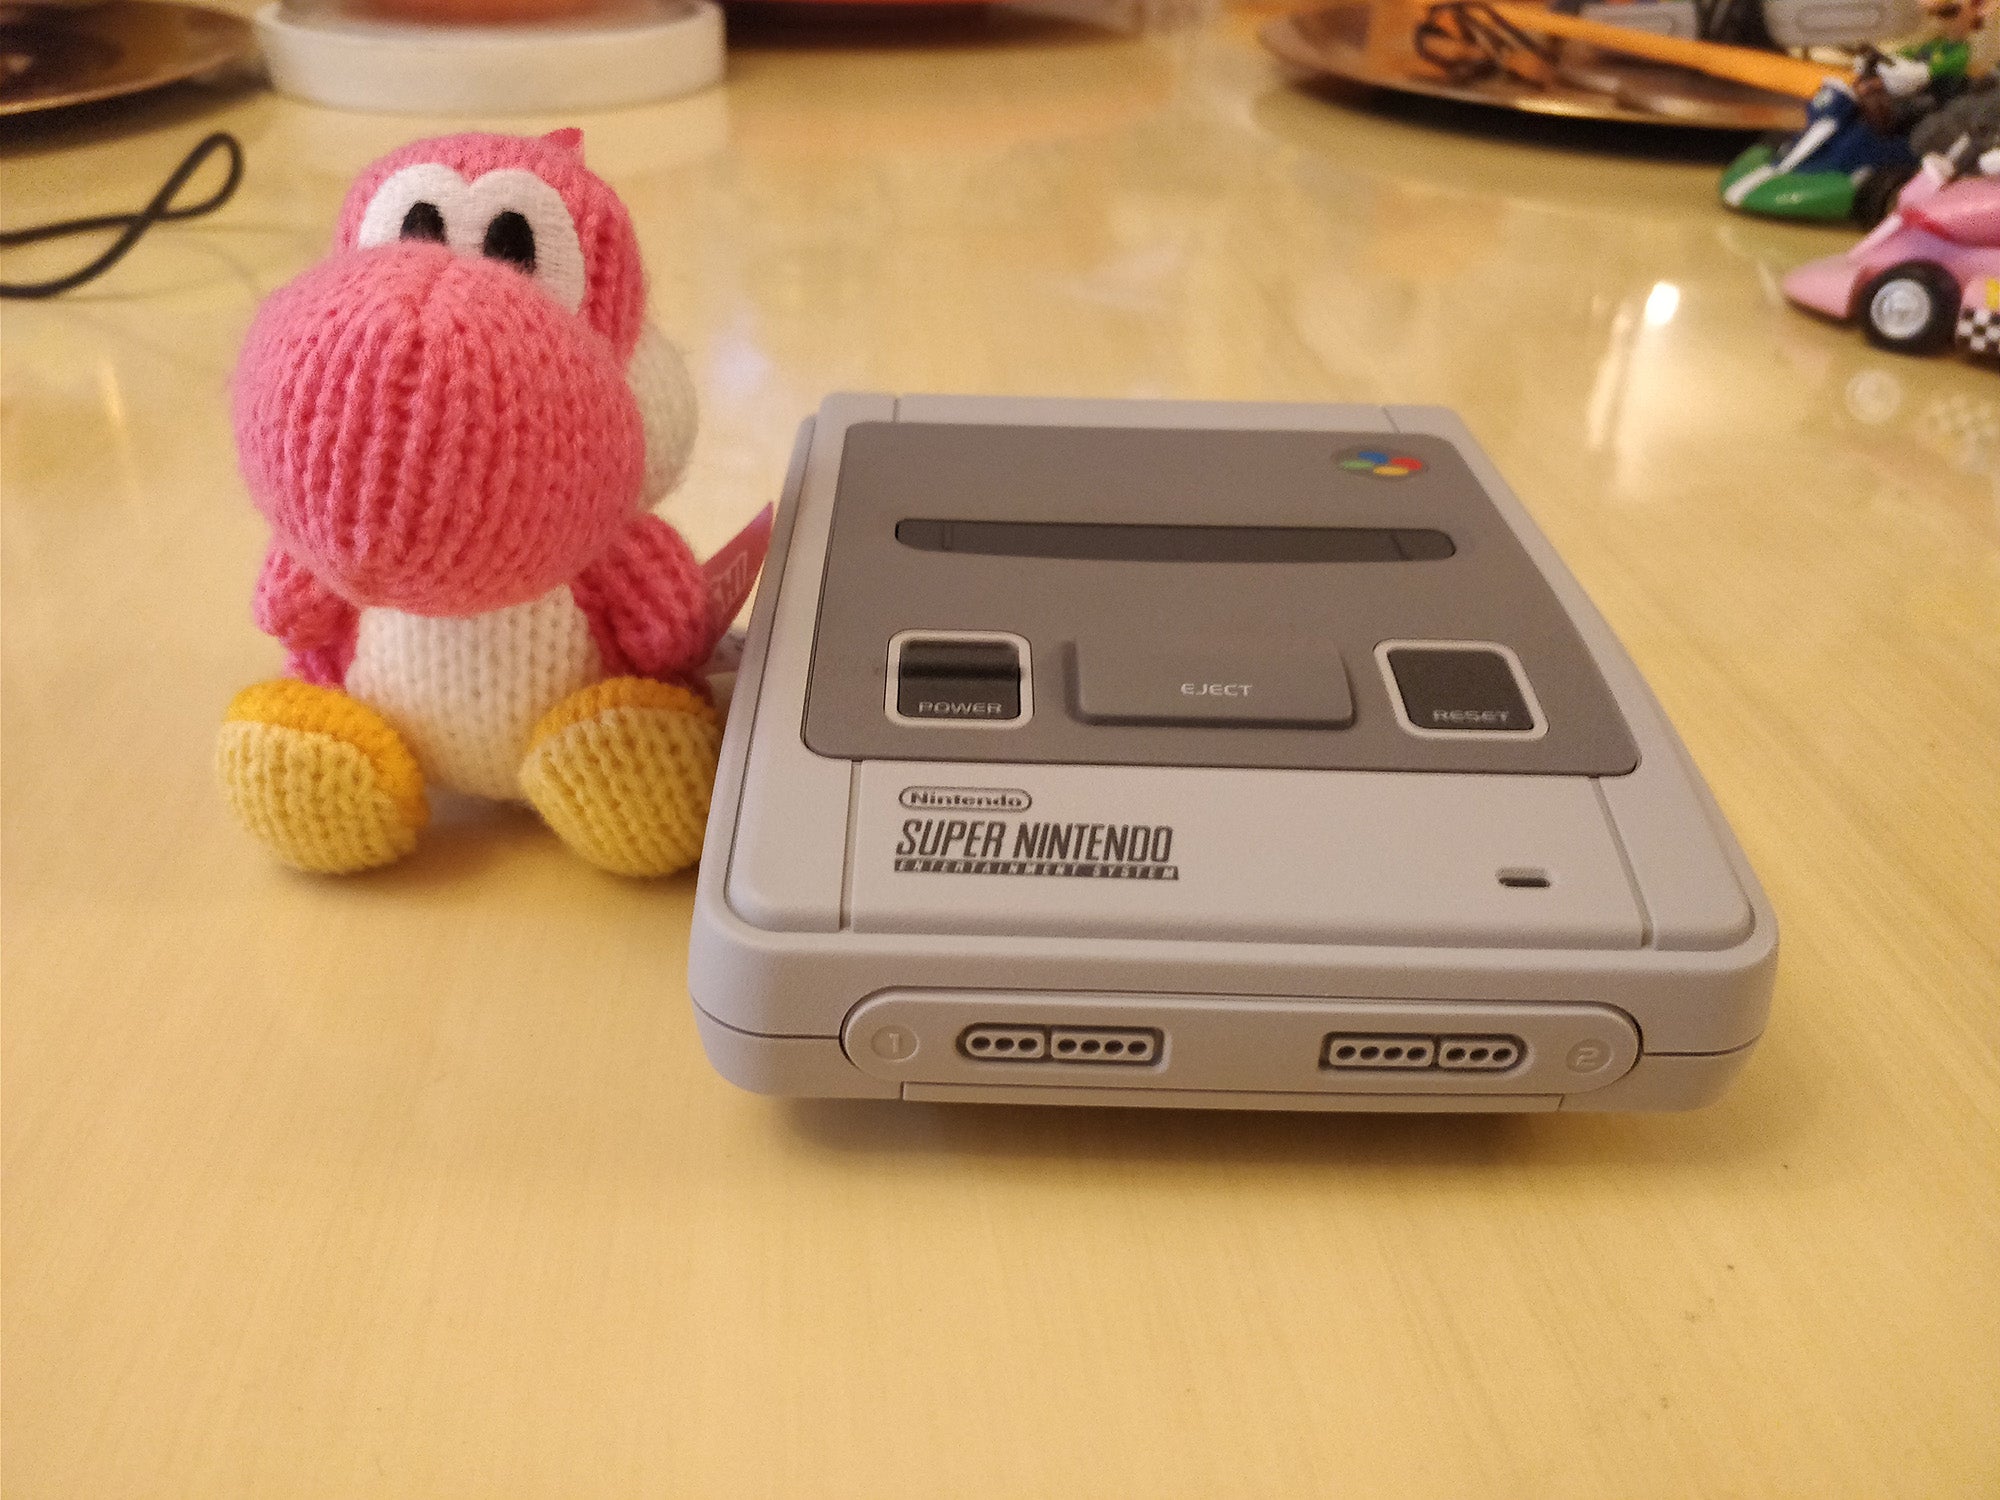 Nintendo Classic Mini SNES console with Yoshi plush toy.